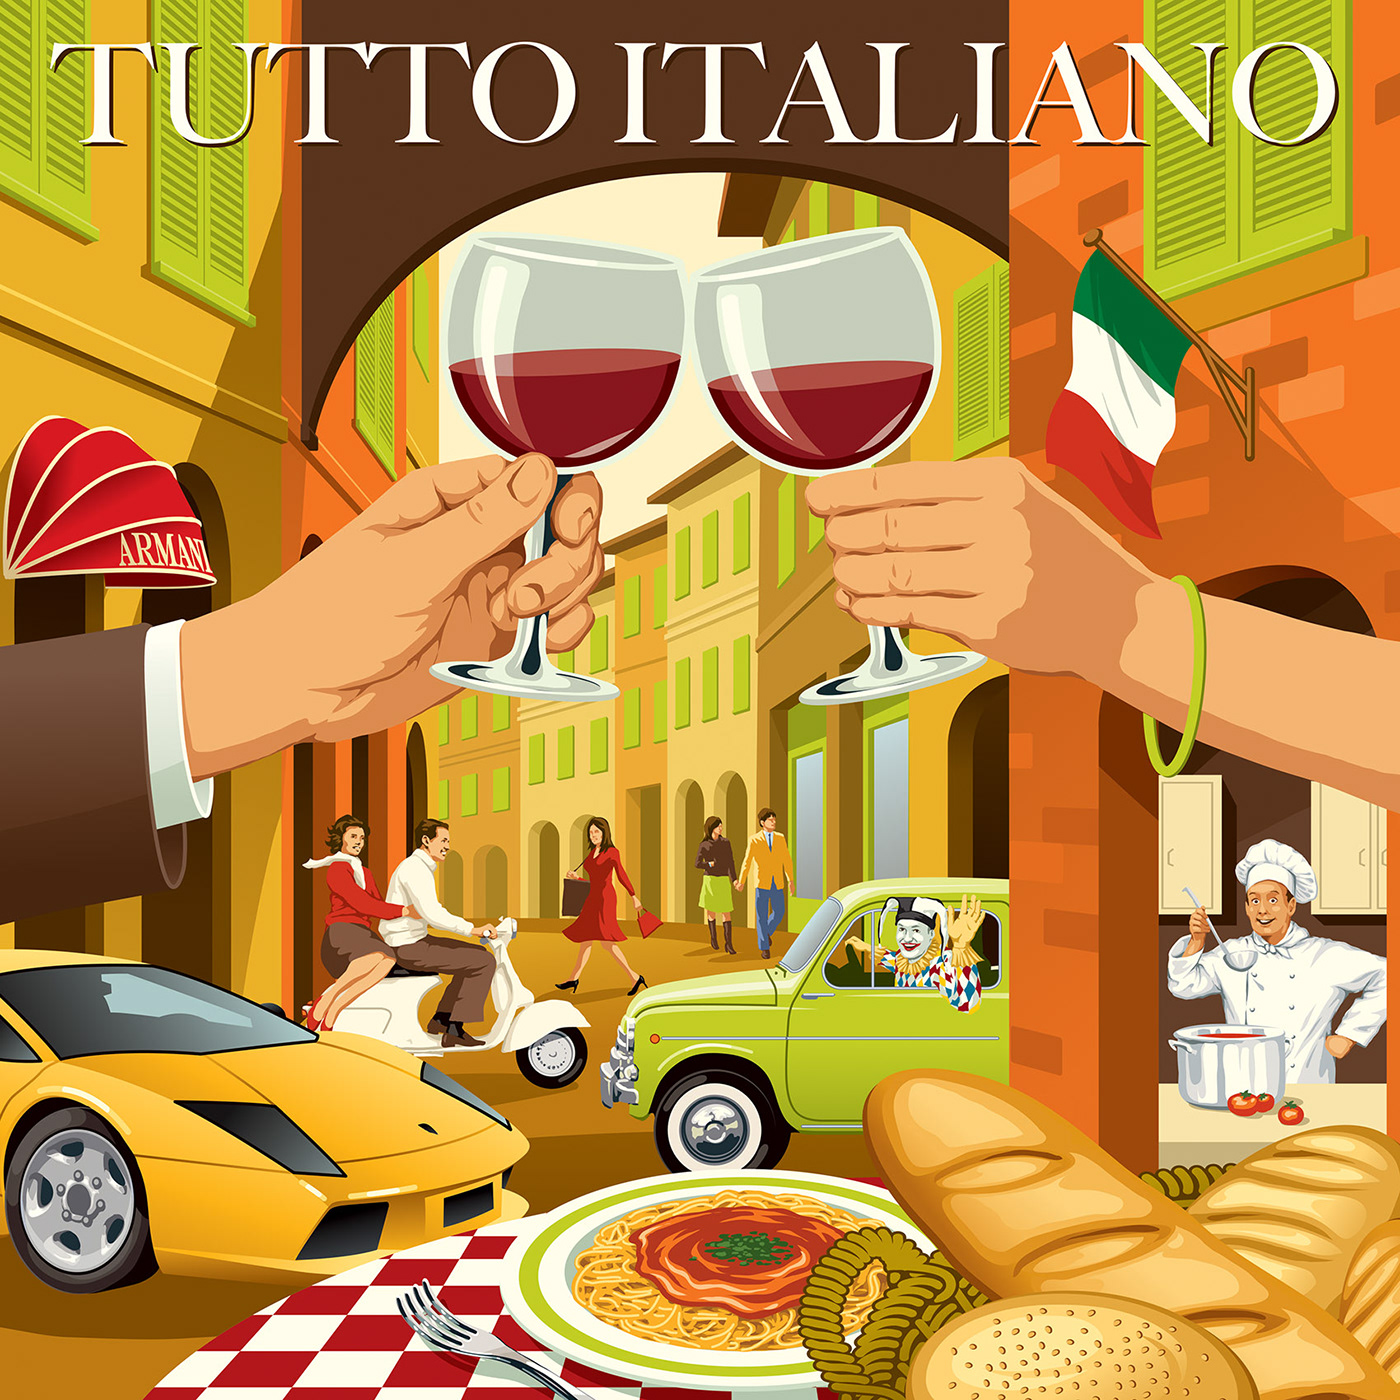 travel poster style illustration of an Italian street scene